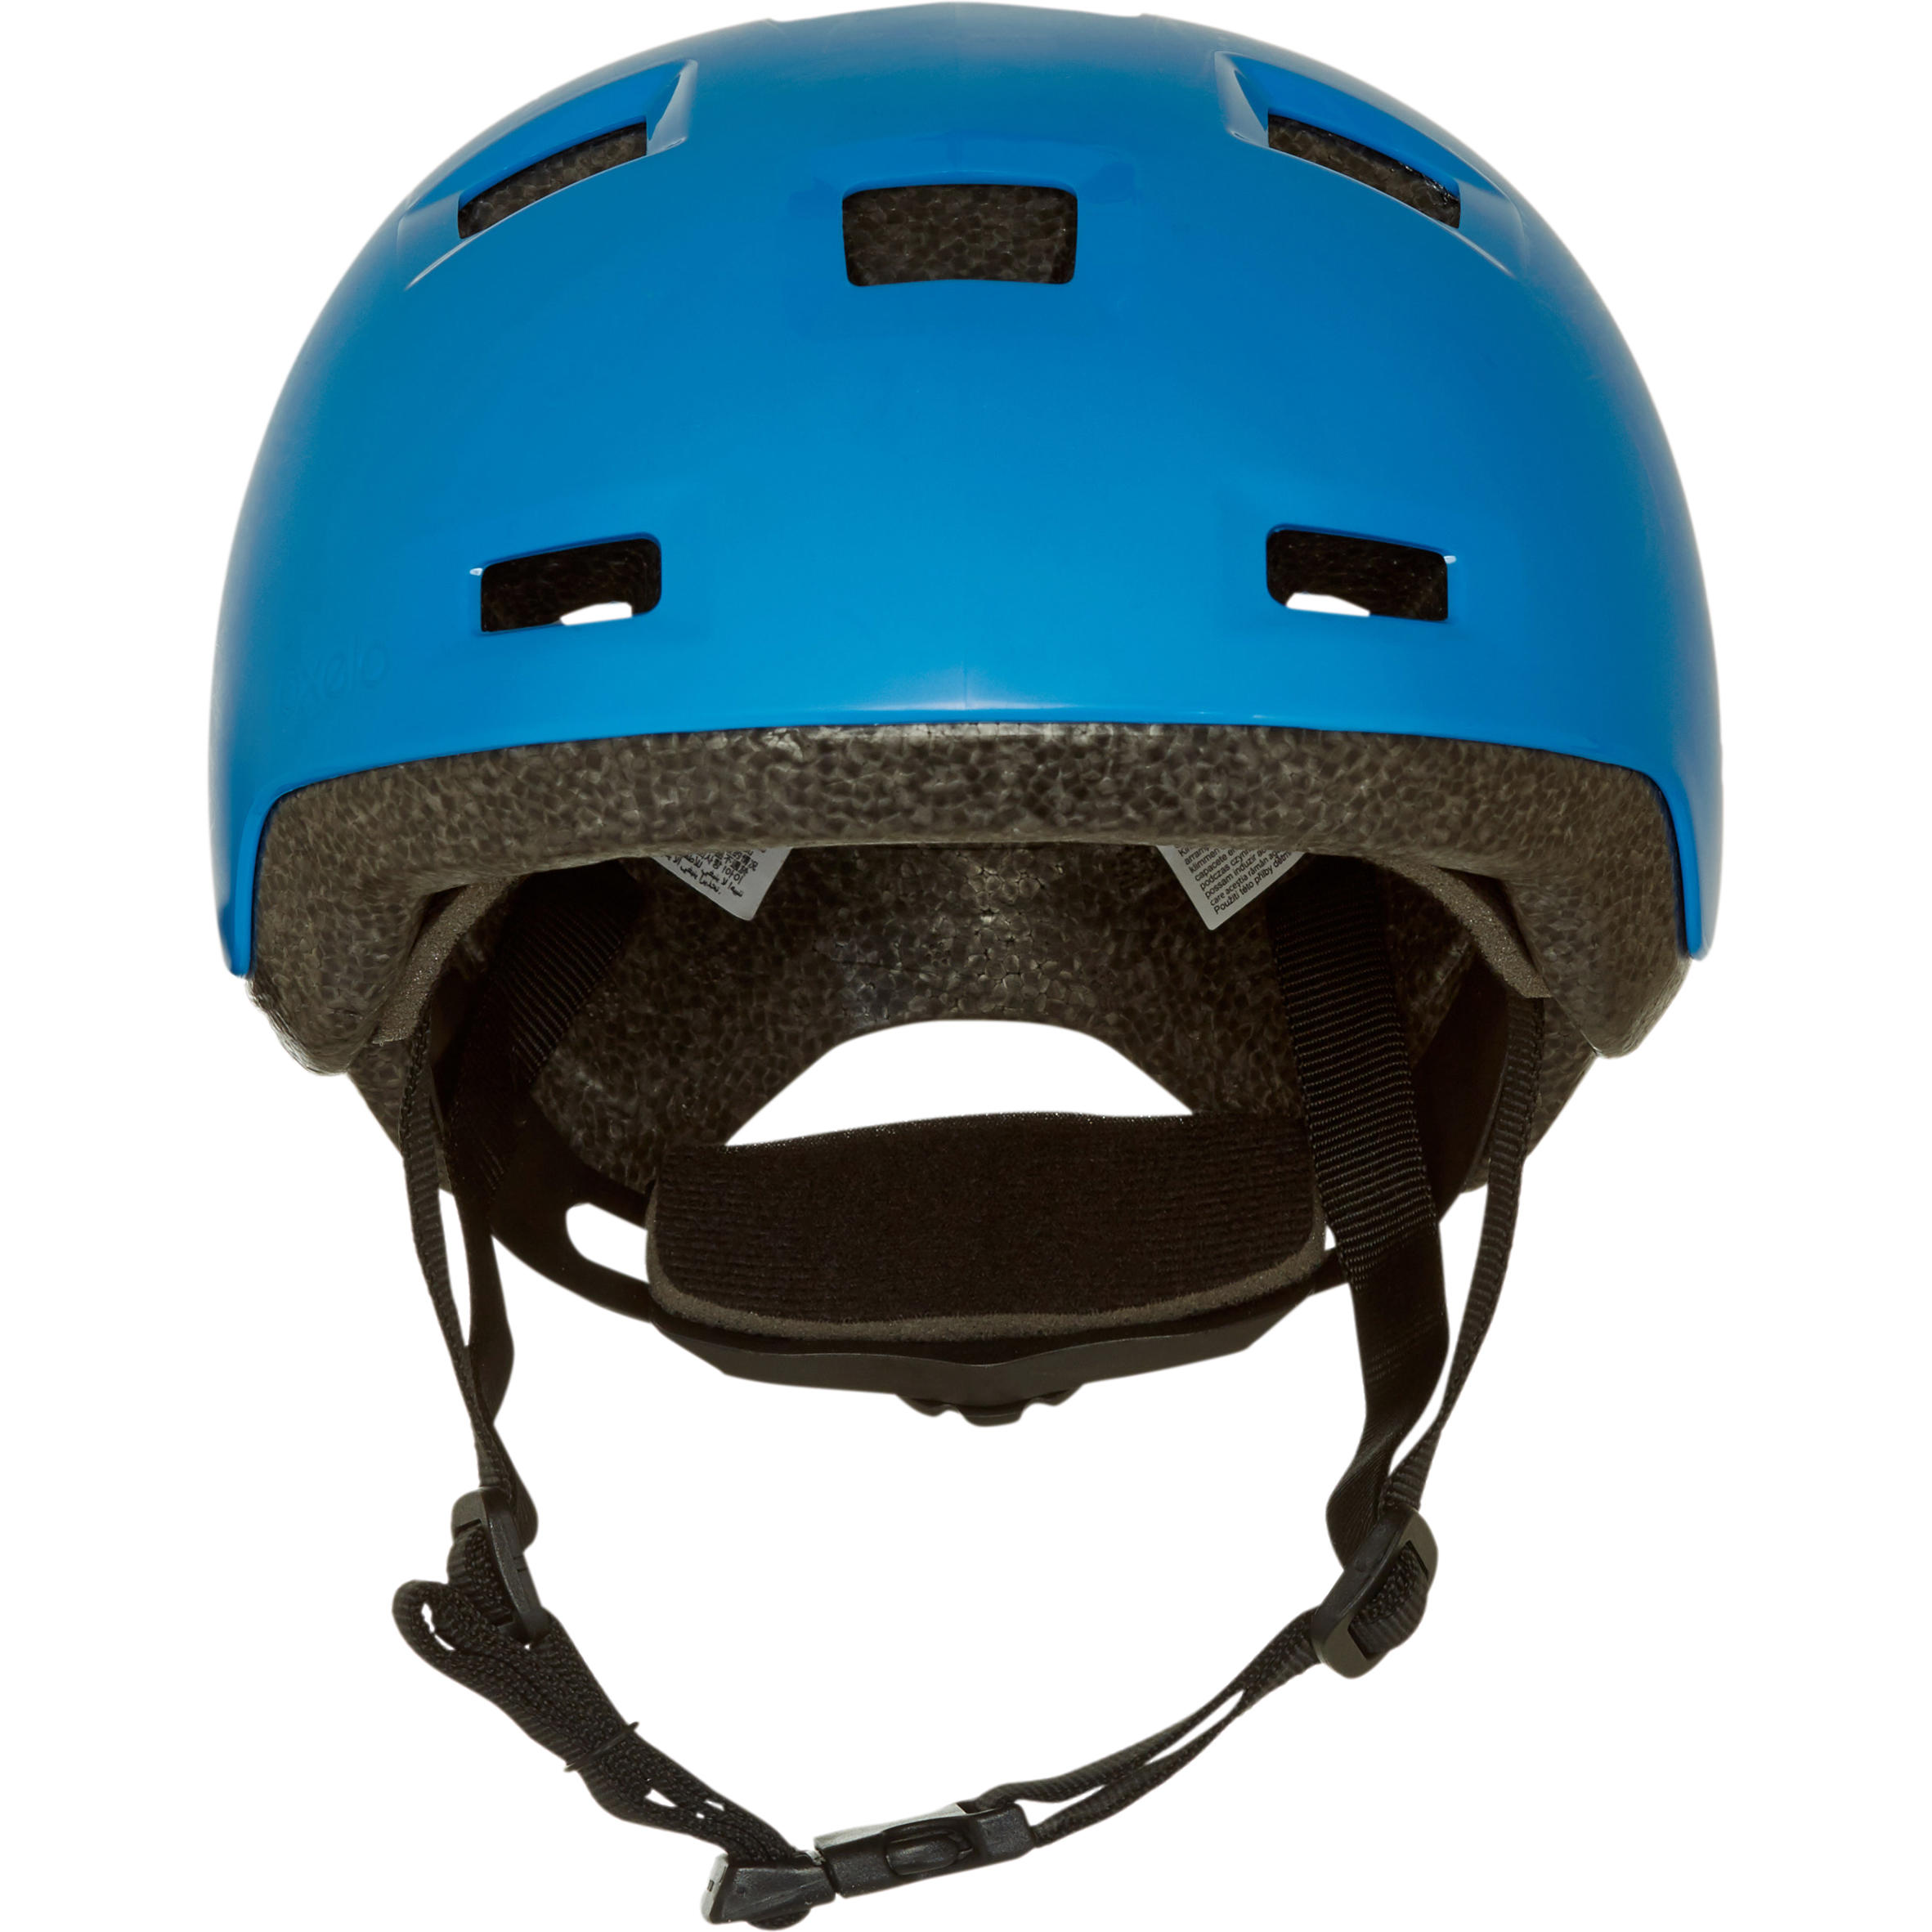 Kids' Inline Skate Skateboard Scooter Helmet - B 100 Blue - OXELO